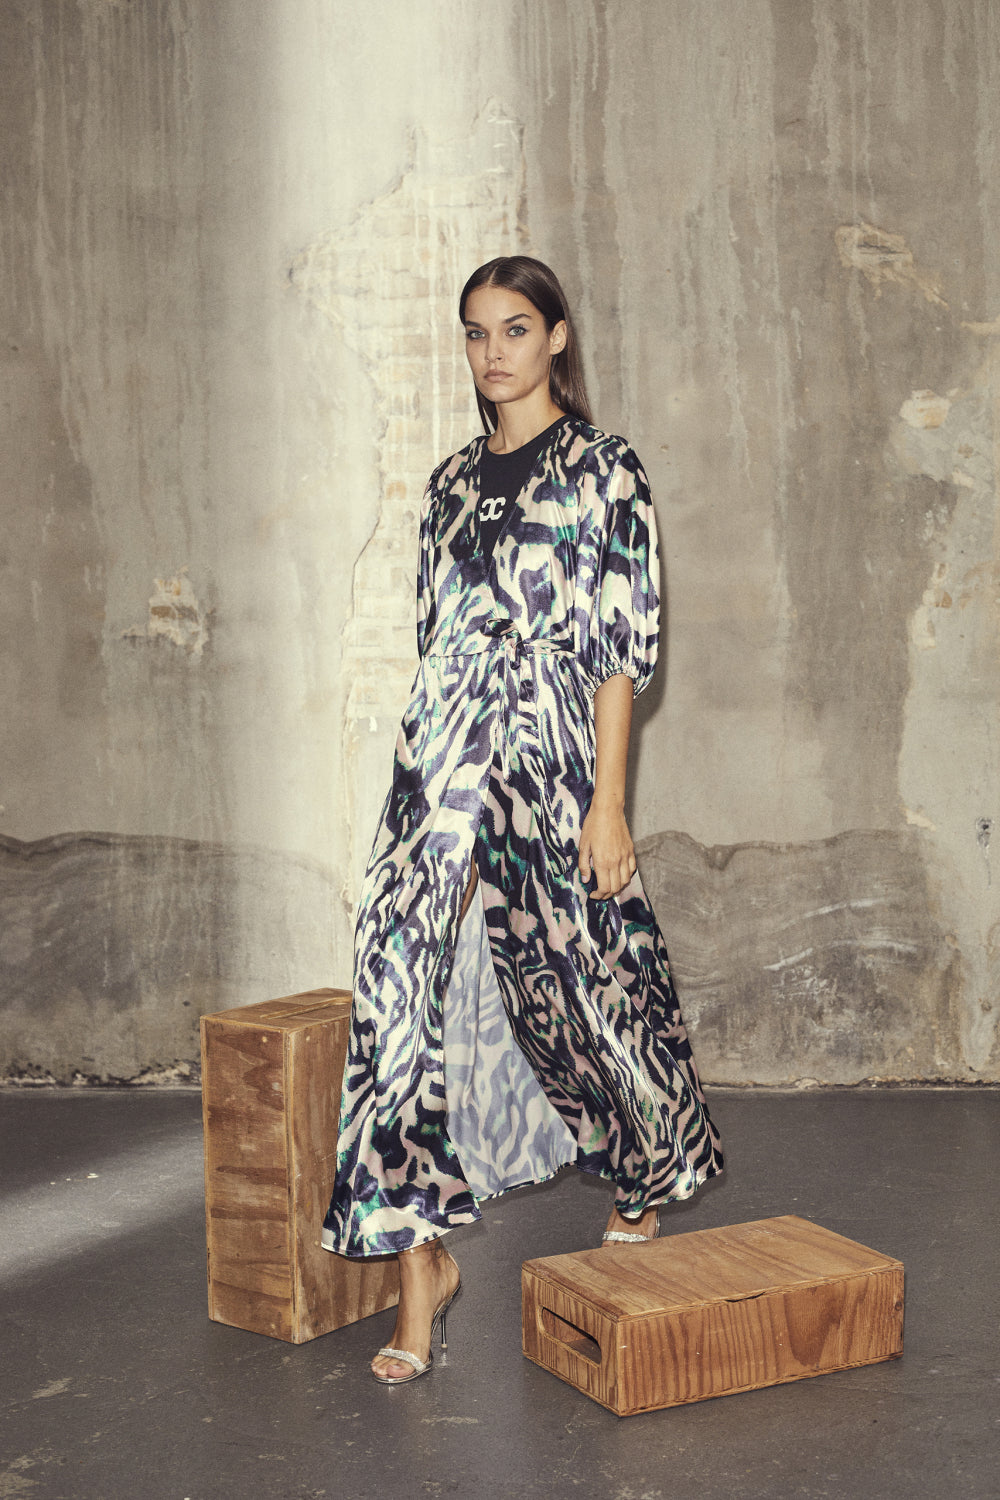 Co'Couture - Zebra Wrap Dress